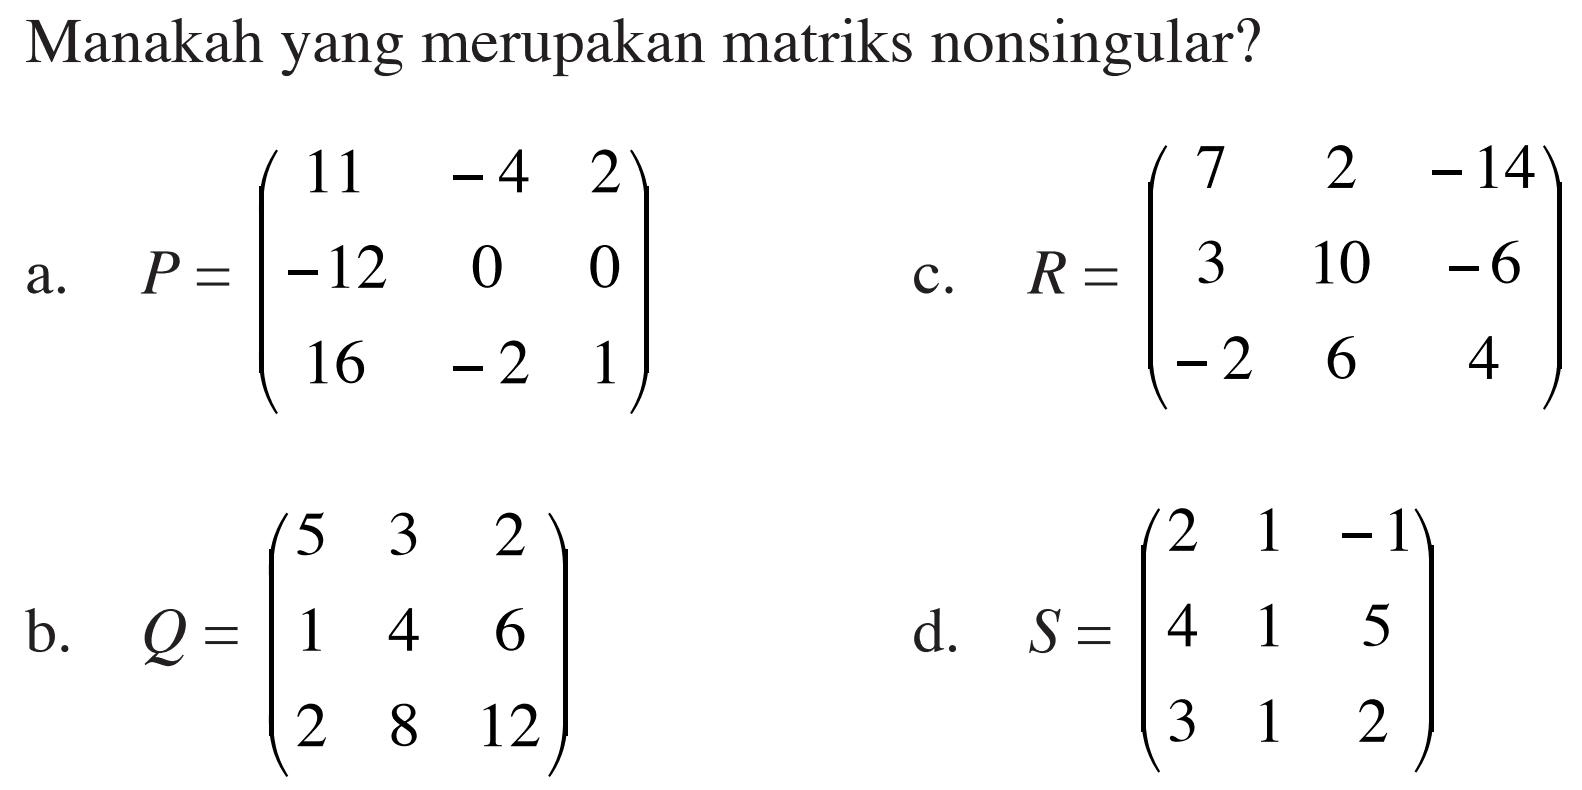 Manakah yang merupakan matriks nonsingular? a. P=(11 -4 2 -12 0 0 16 -2 1) b. Q=(5 3 2 1 4 6 2 8 12) c. R=(7 2 -14 3 10 -6 -2 6 4) d. S=(2 1 -1 4 1 5 3 1 2)